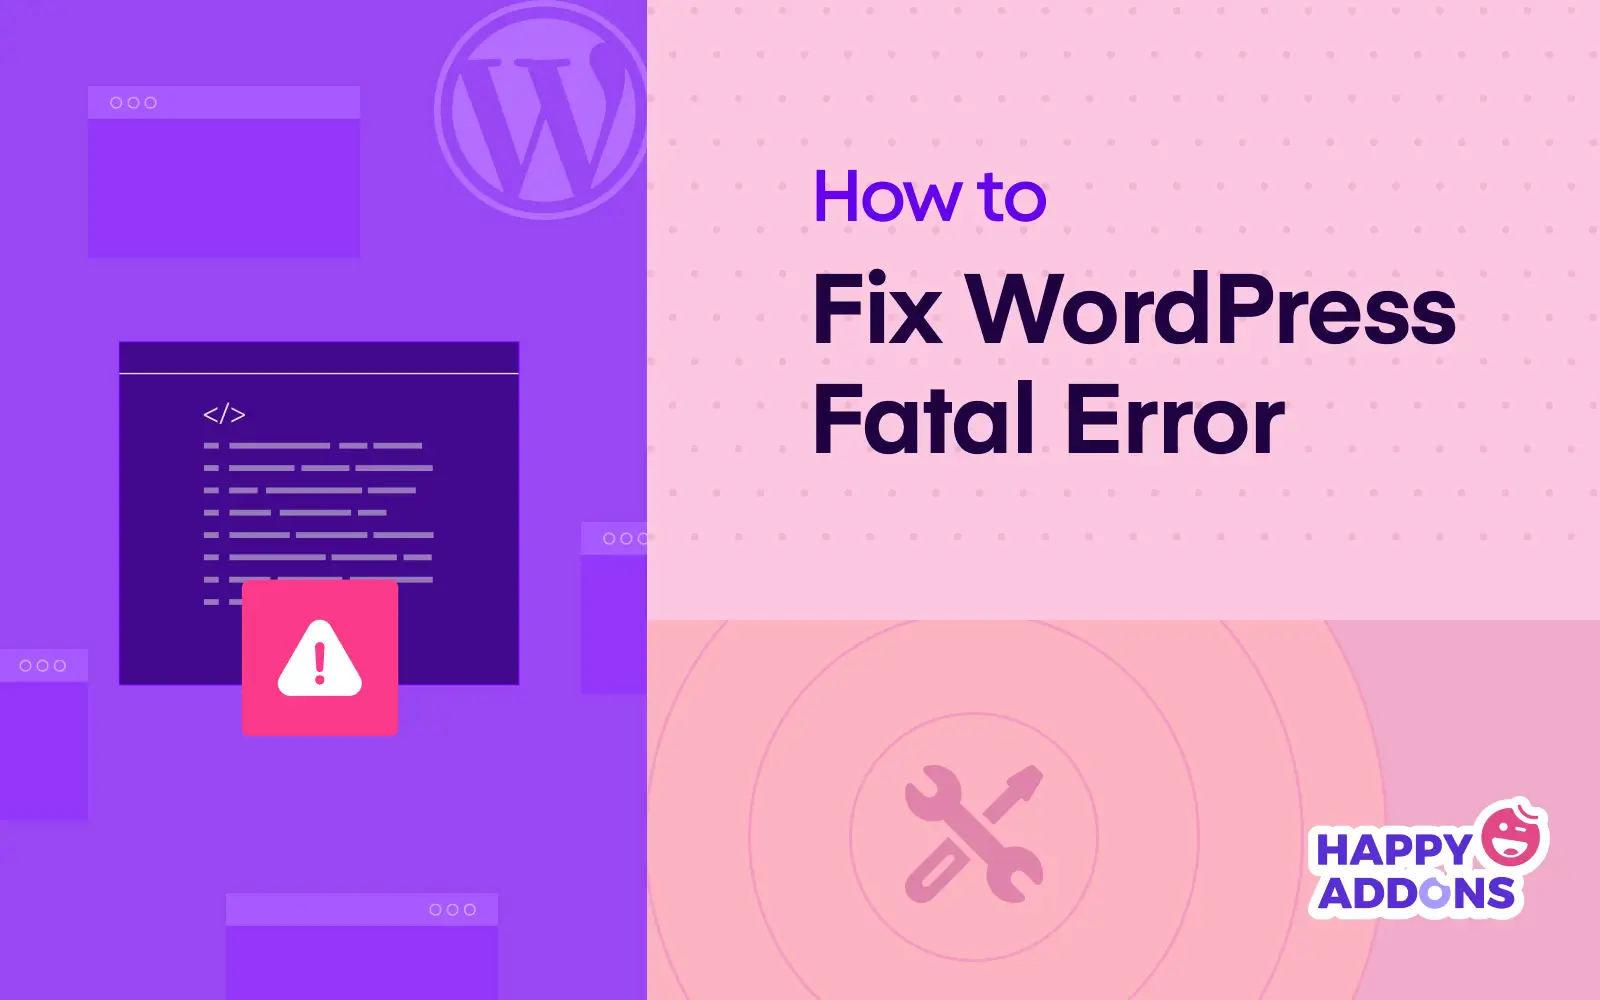 How to Fix WordPress Fatal Error